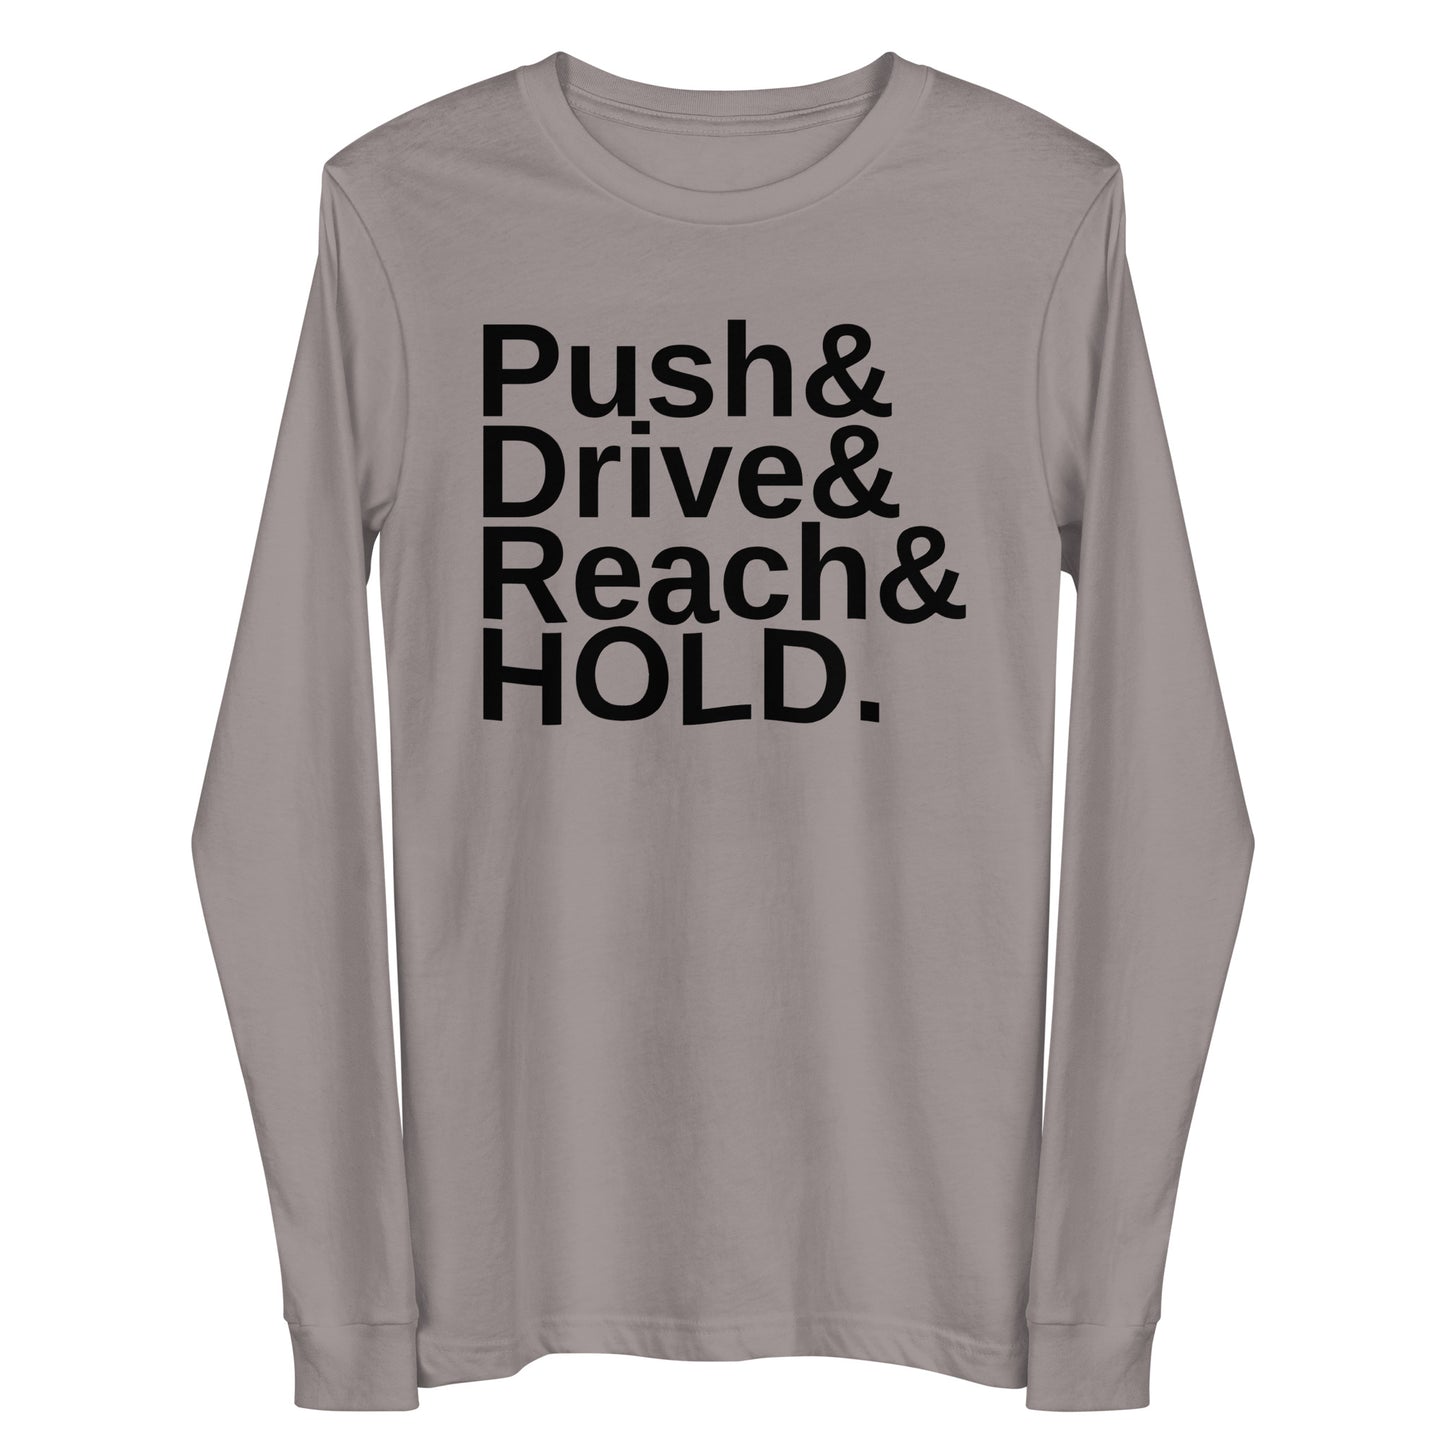 Push&Drive&Reach&HOLD Long Sleeve Tee